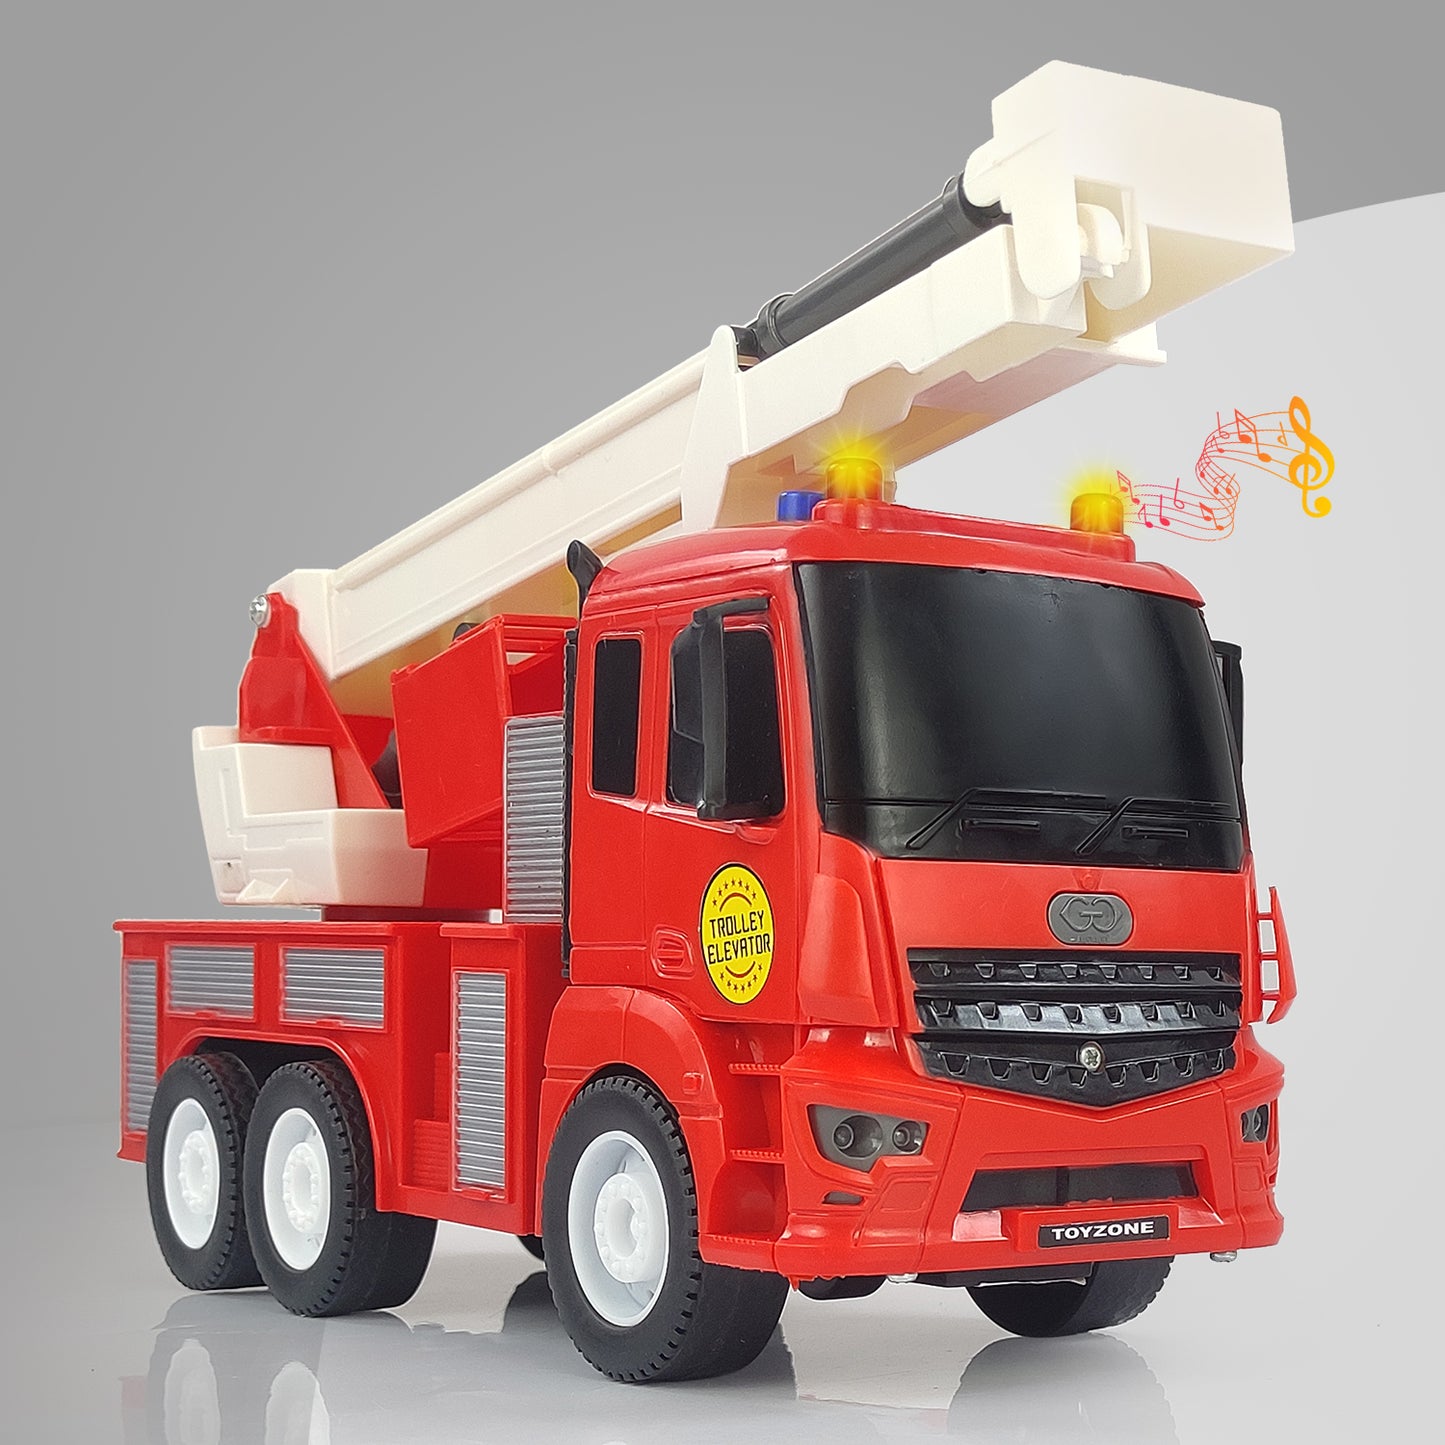 NHR Rescue Crane Truck Toy (Red)